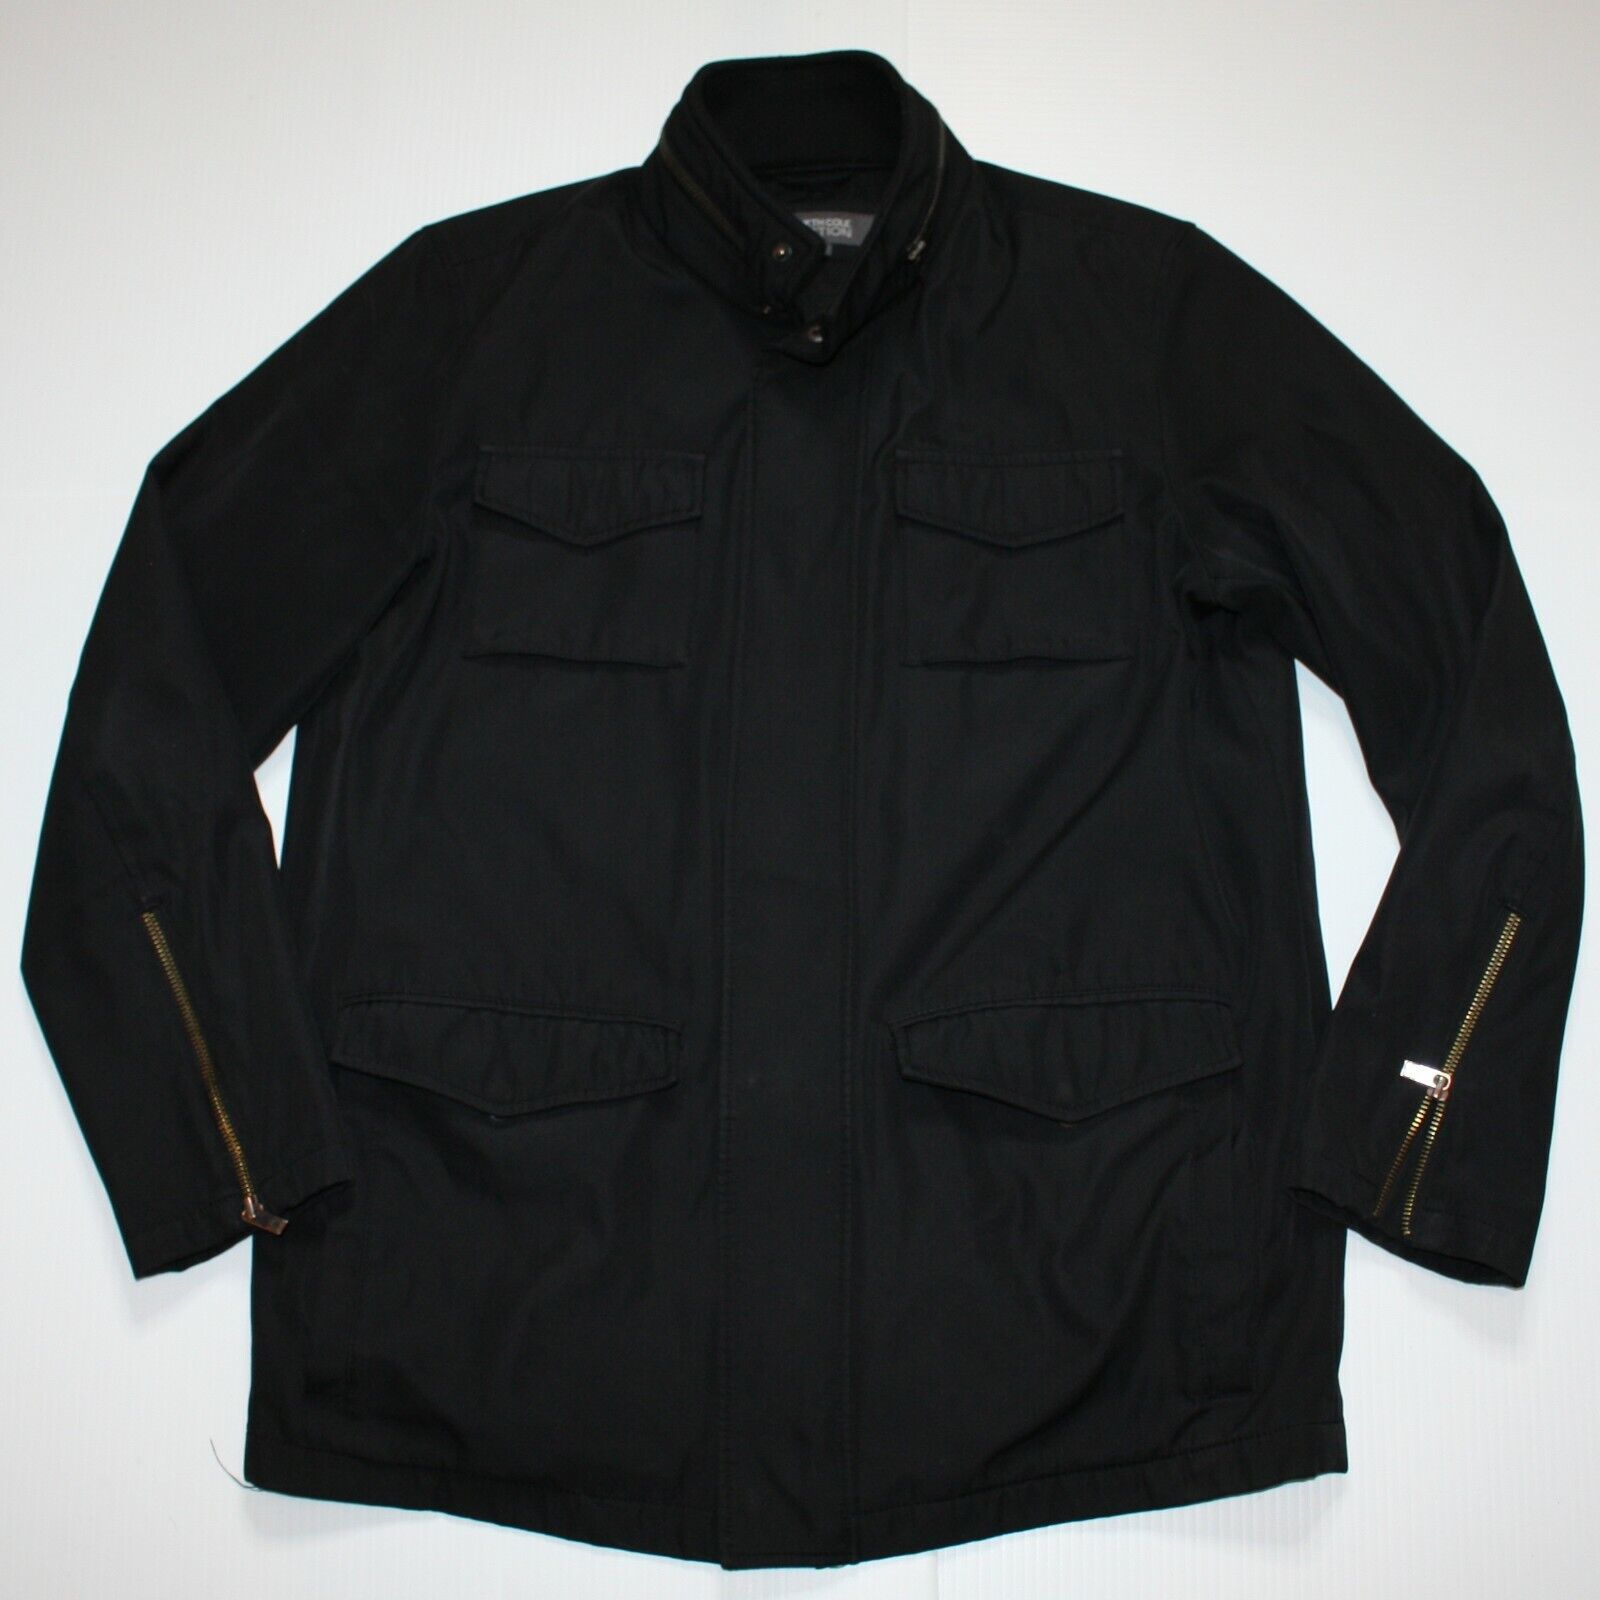 Kenneth Cole Reaction Men's Nylon Blend Black Jacket size M - $24.99